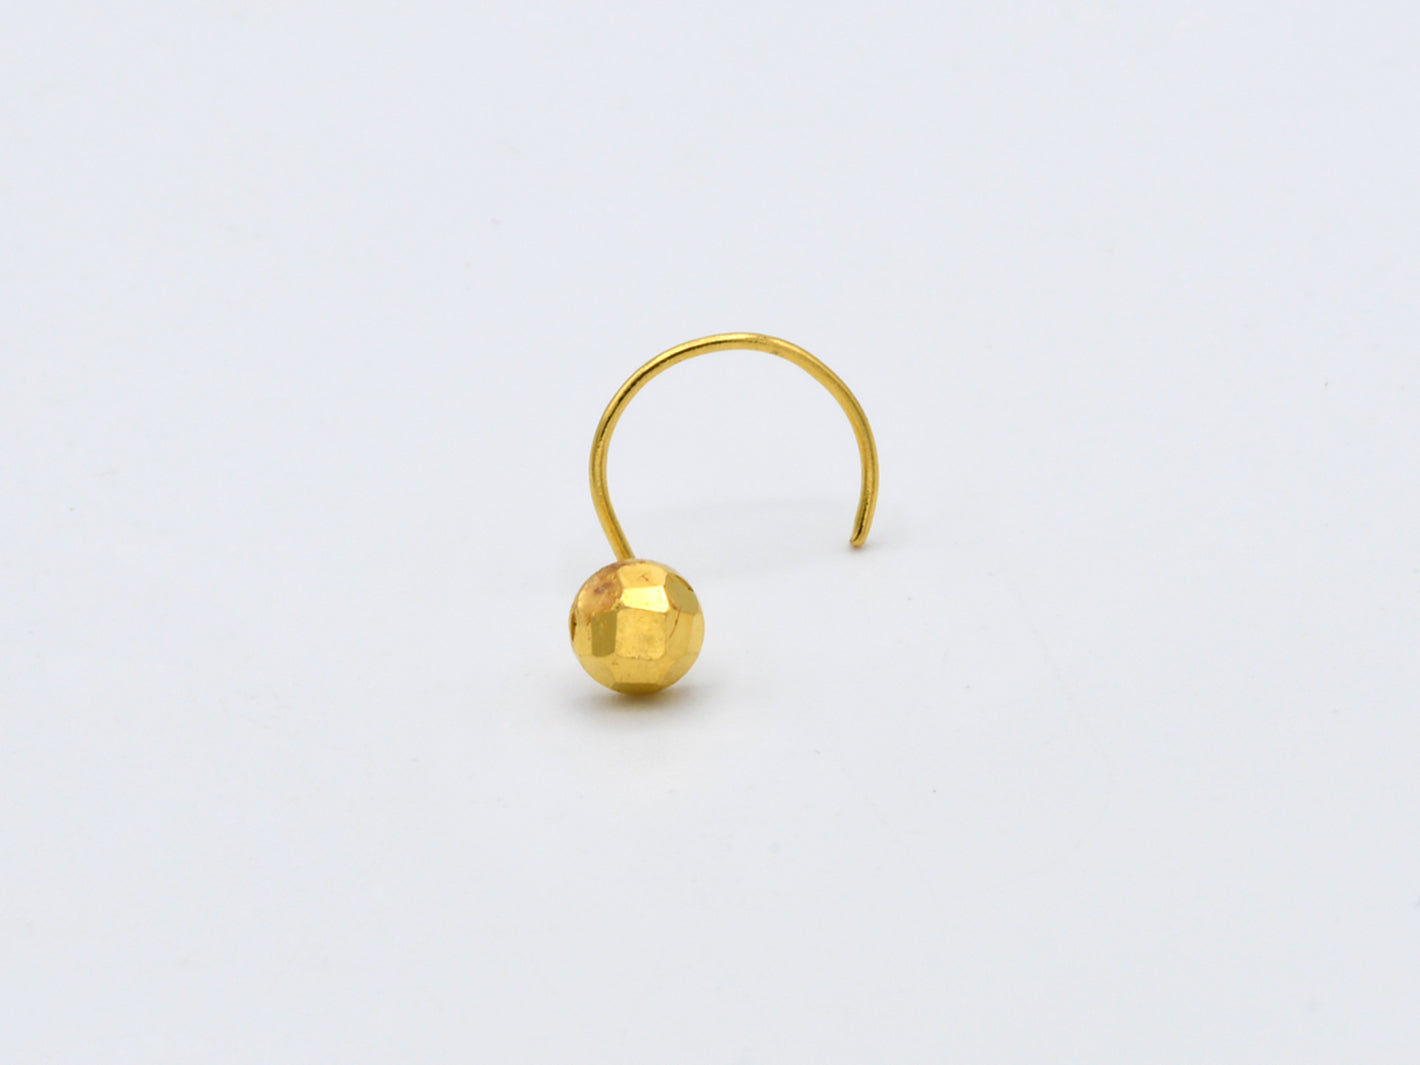 22ct Gold Nose Pin - 3.5 mm - Roop Darshan